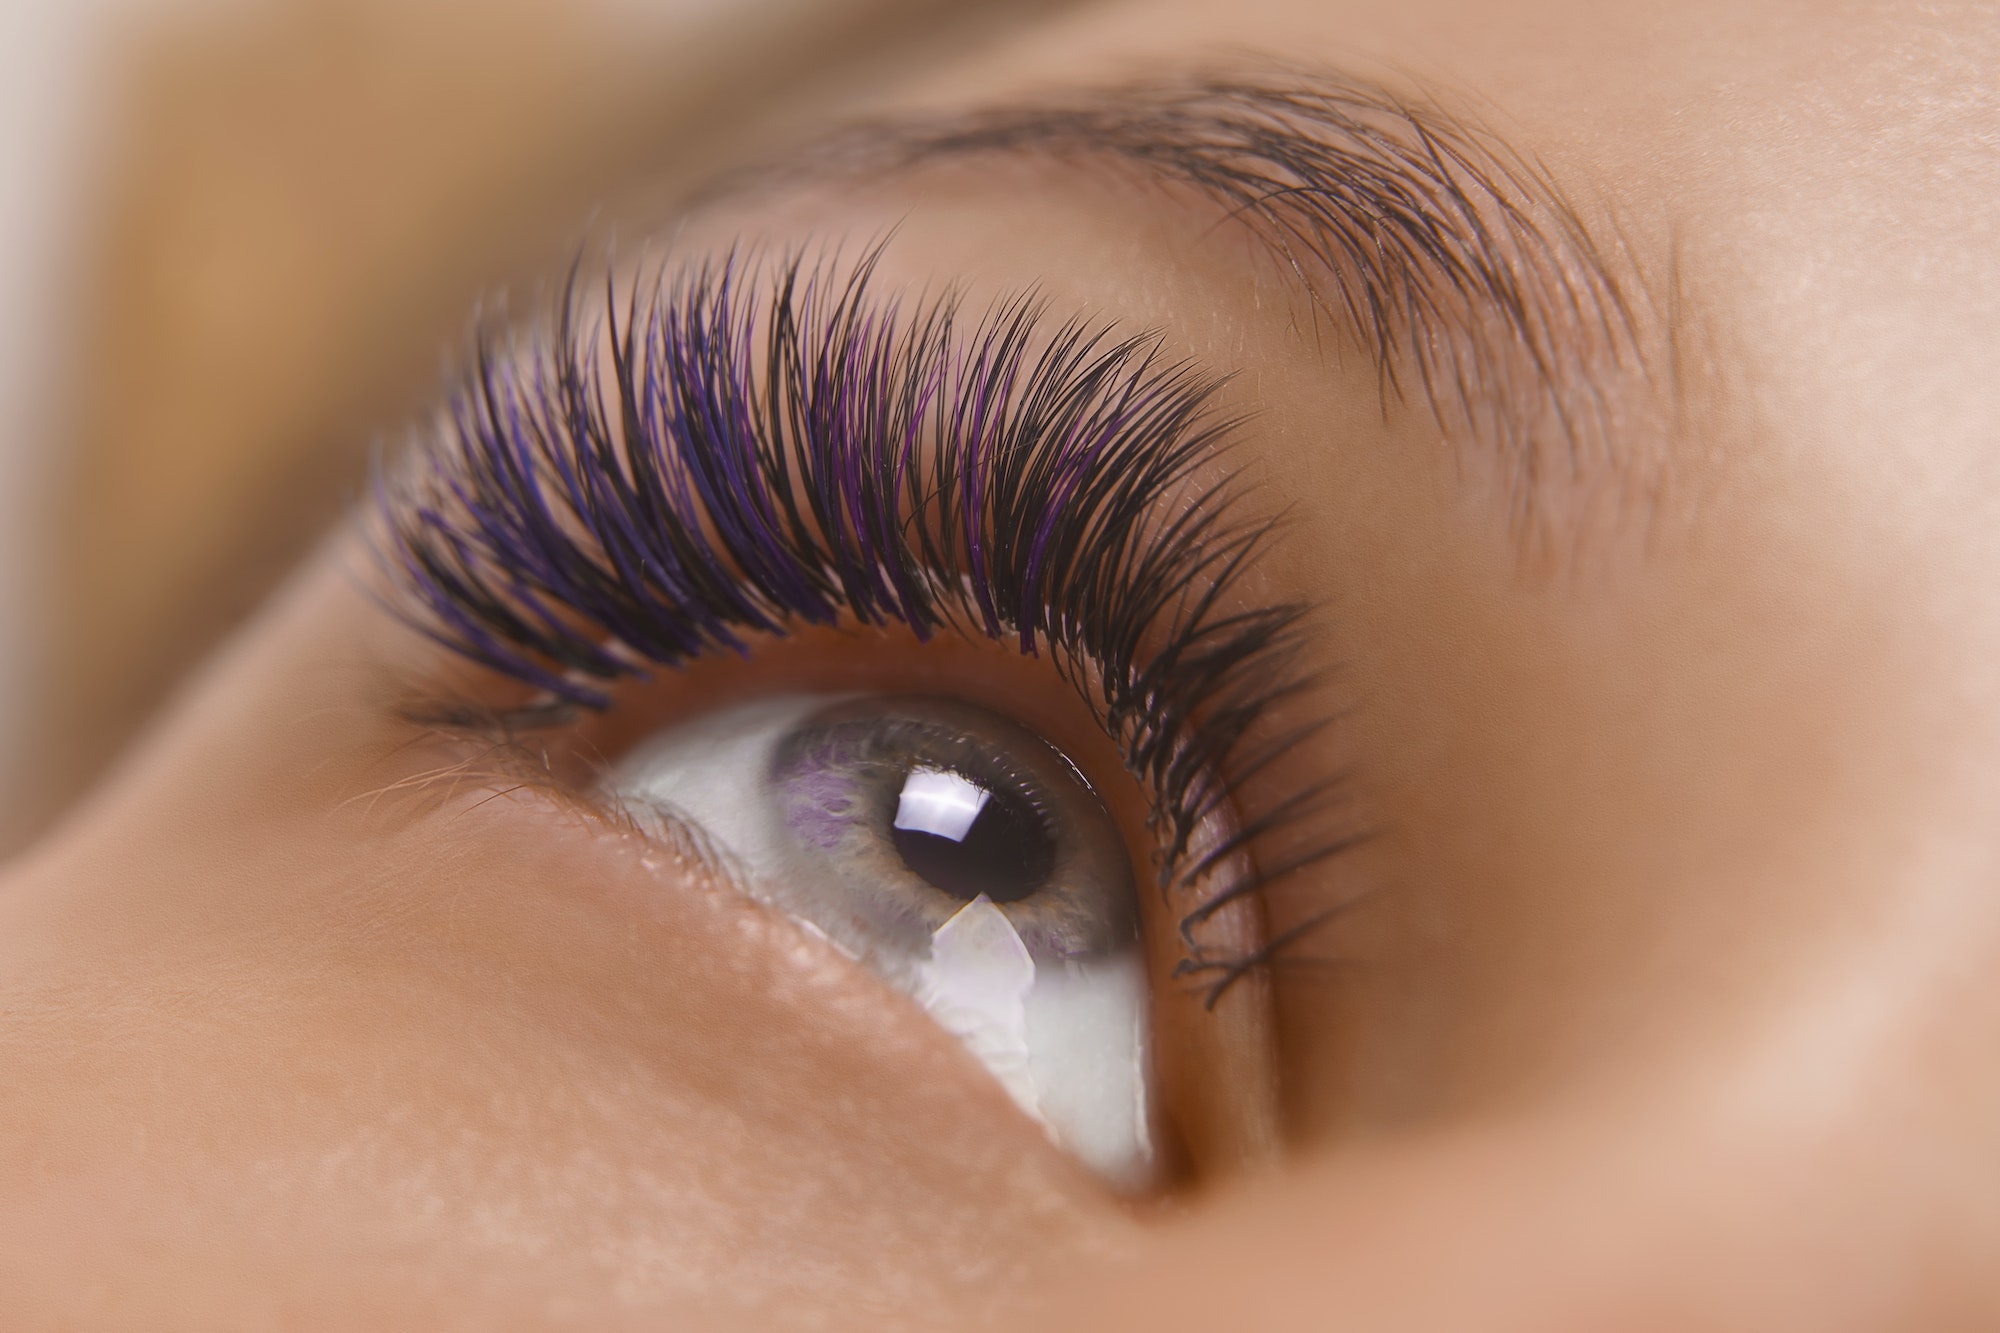 Eyelash Extension Procedure. Close up view of beautiful female eye with long eyelashes, smooth